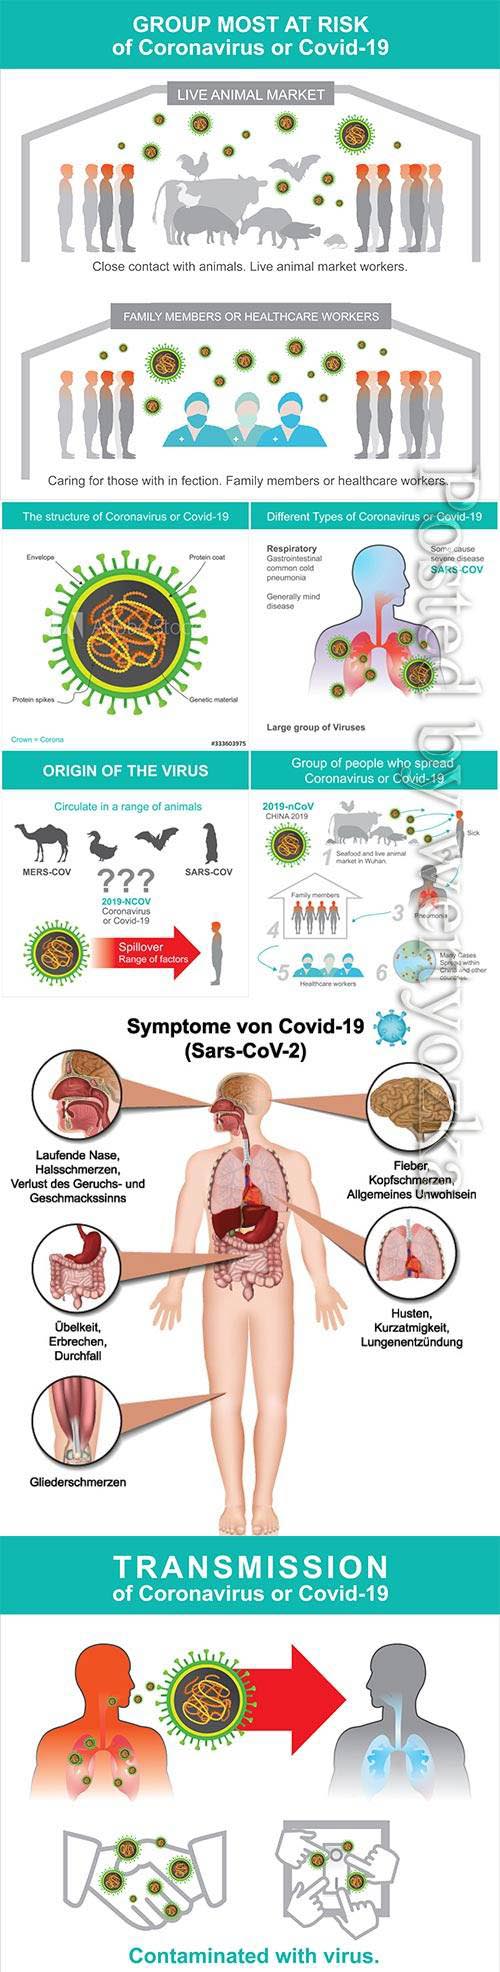 COVID 19, Coranavirus vector illustration sets # 14